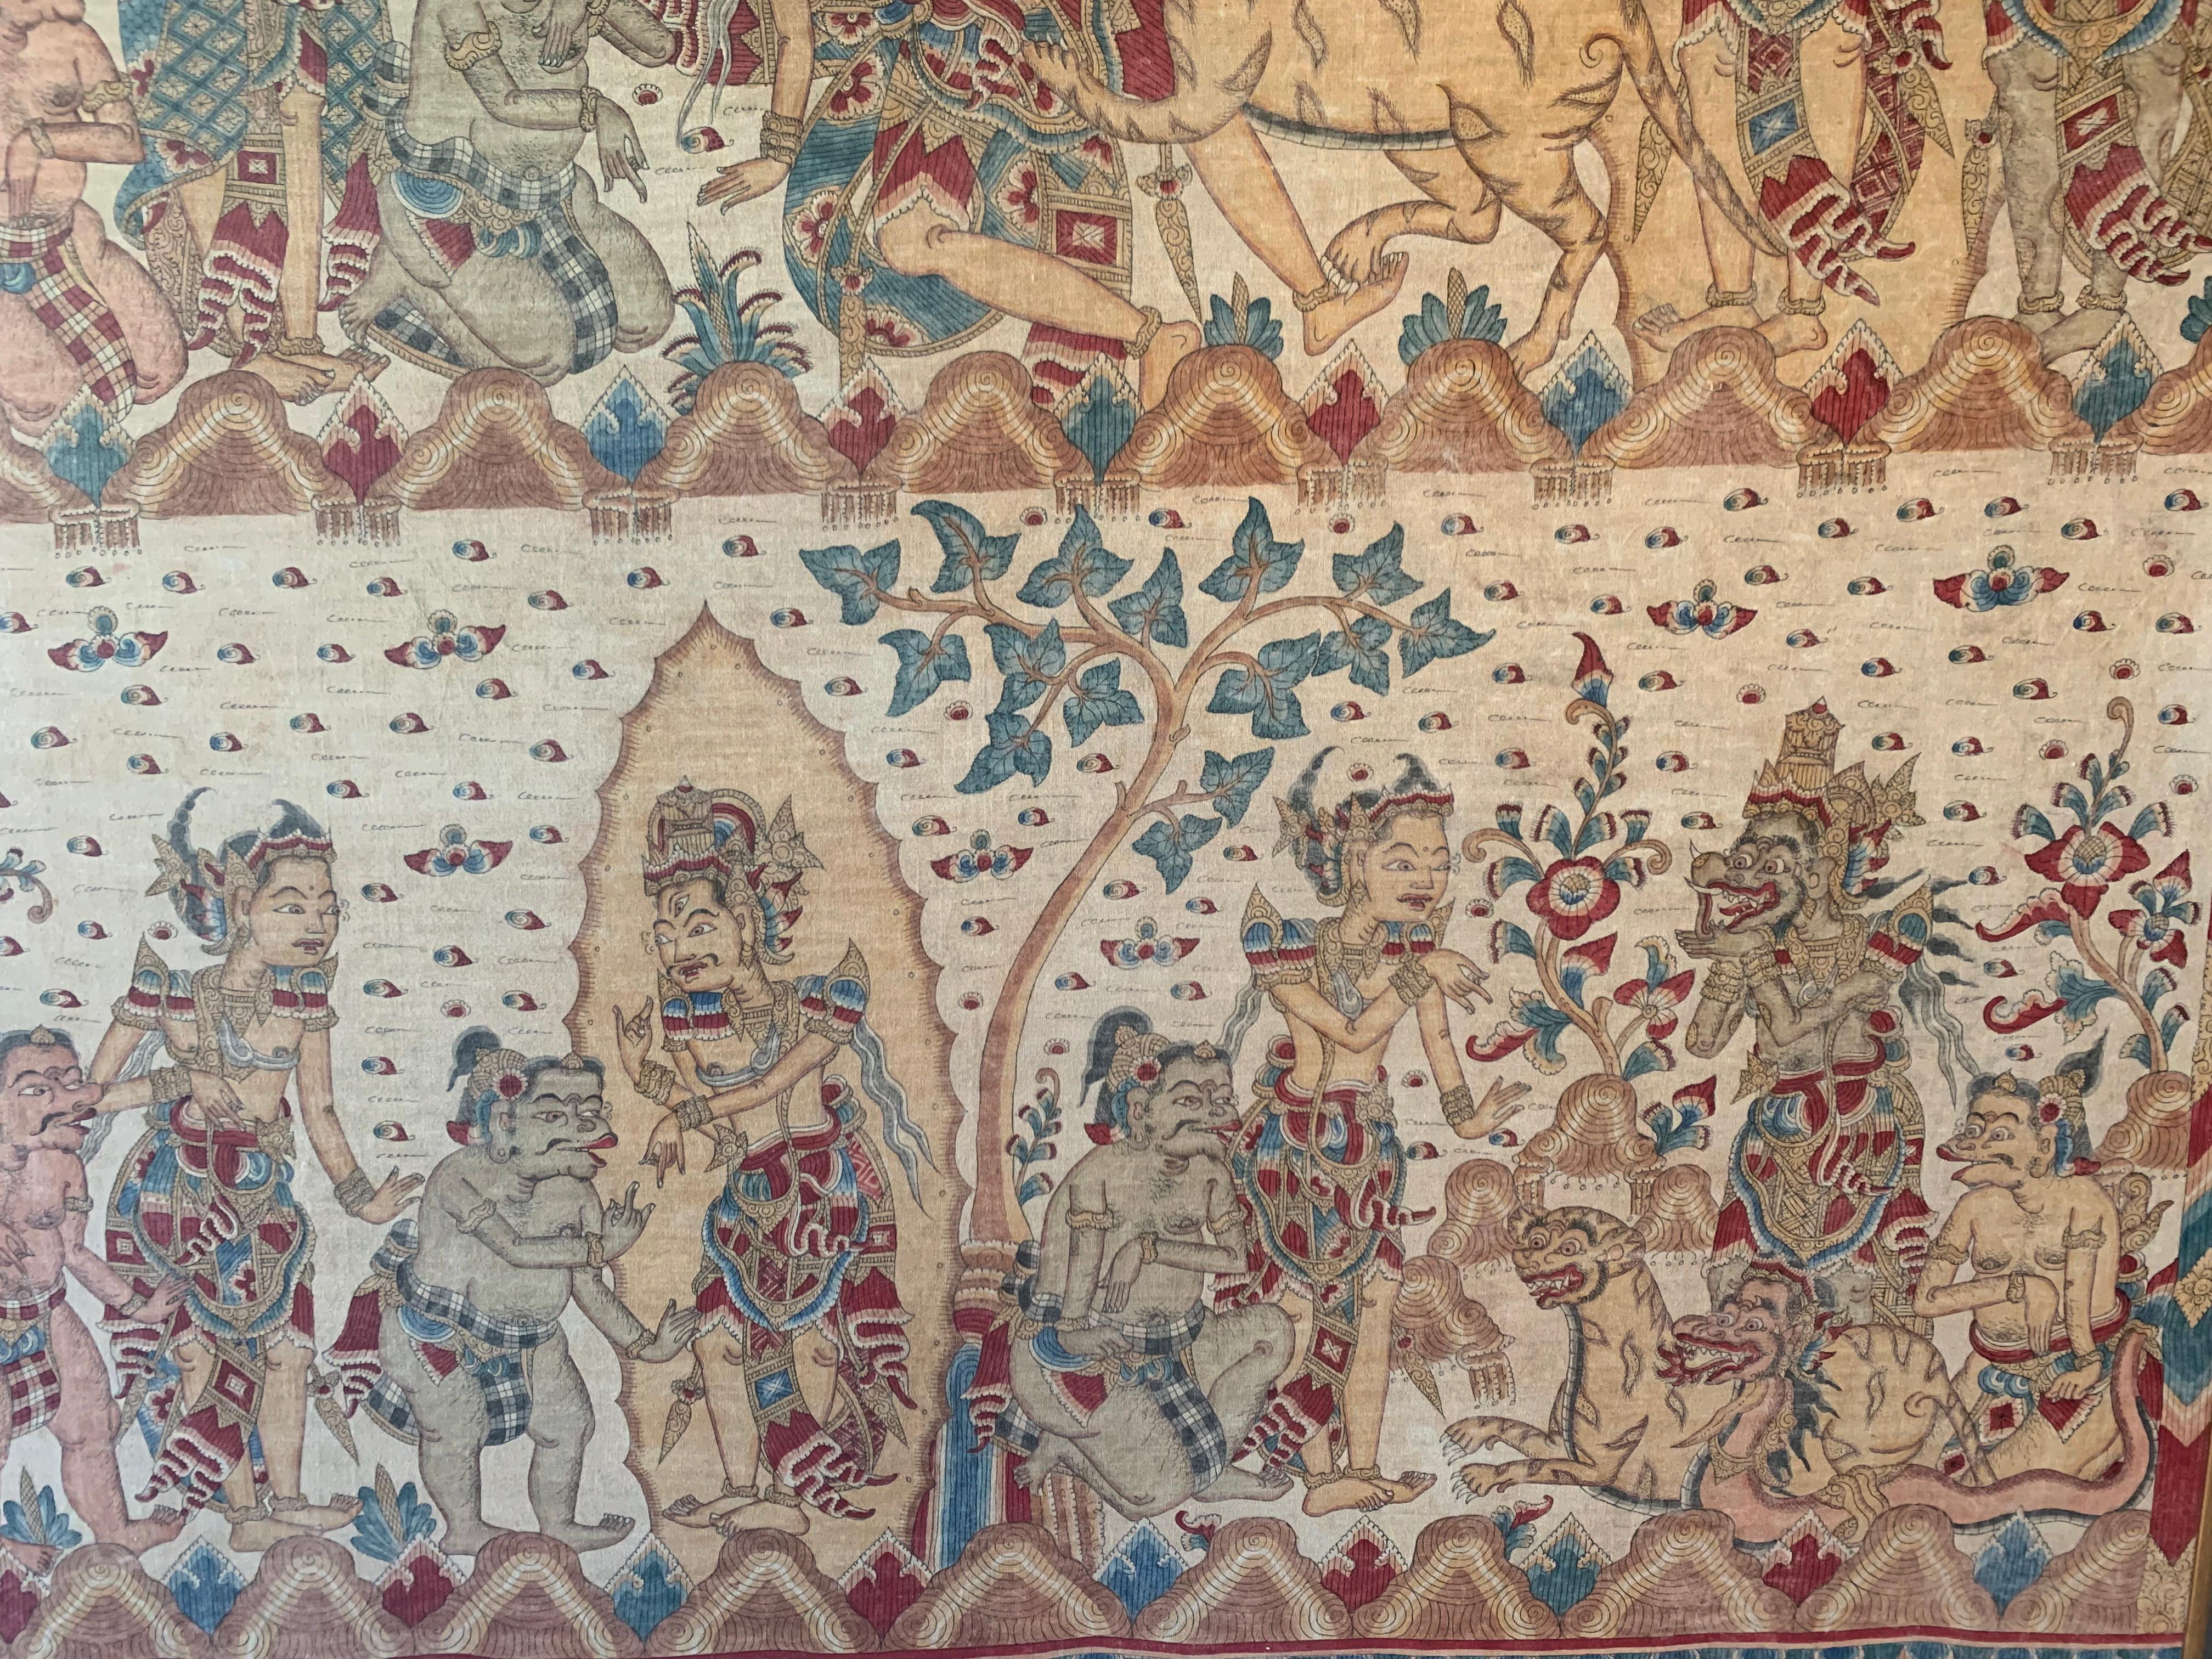 Cotton Bali Hindu Textile Framed 'Kamasan' Painting, Indonesia C. 1950